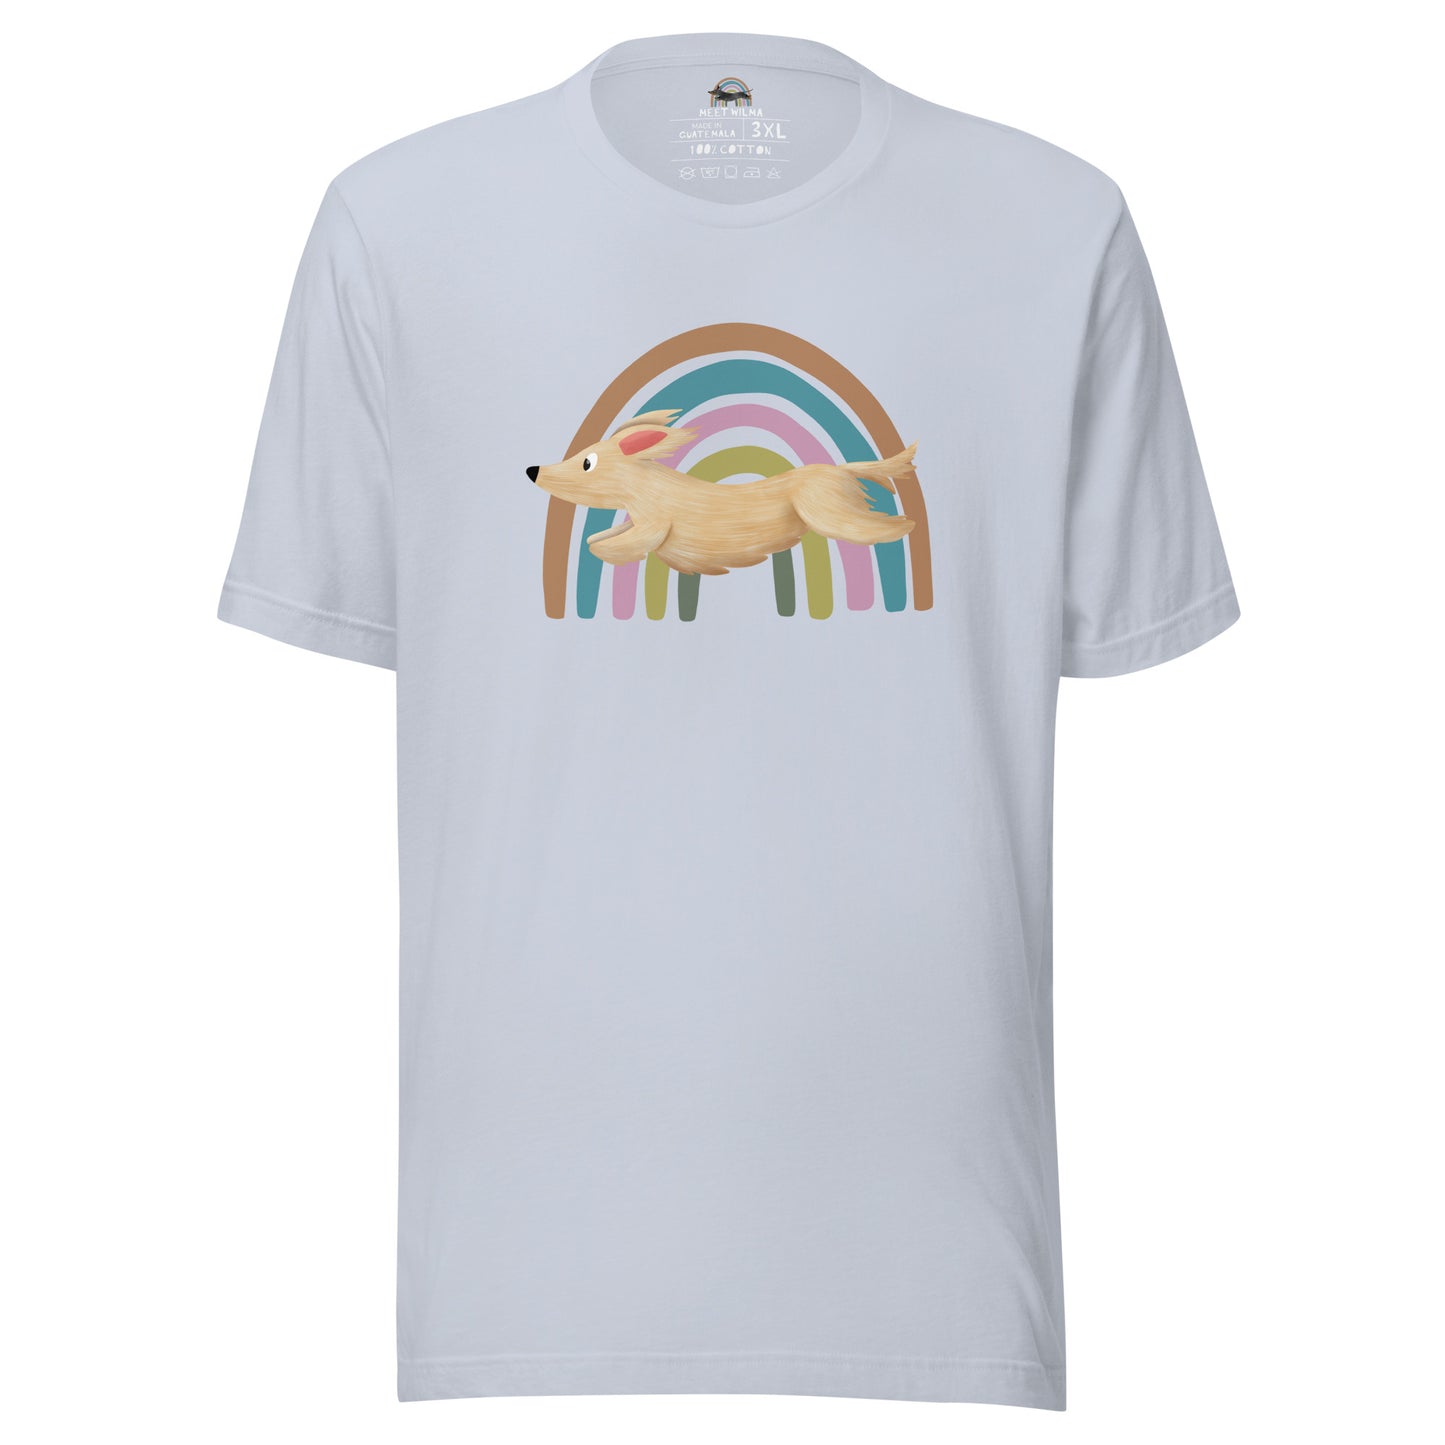 Unisex Shirt "Rainbow" Cream